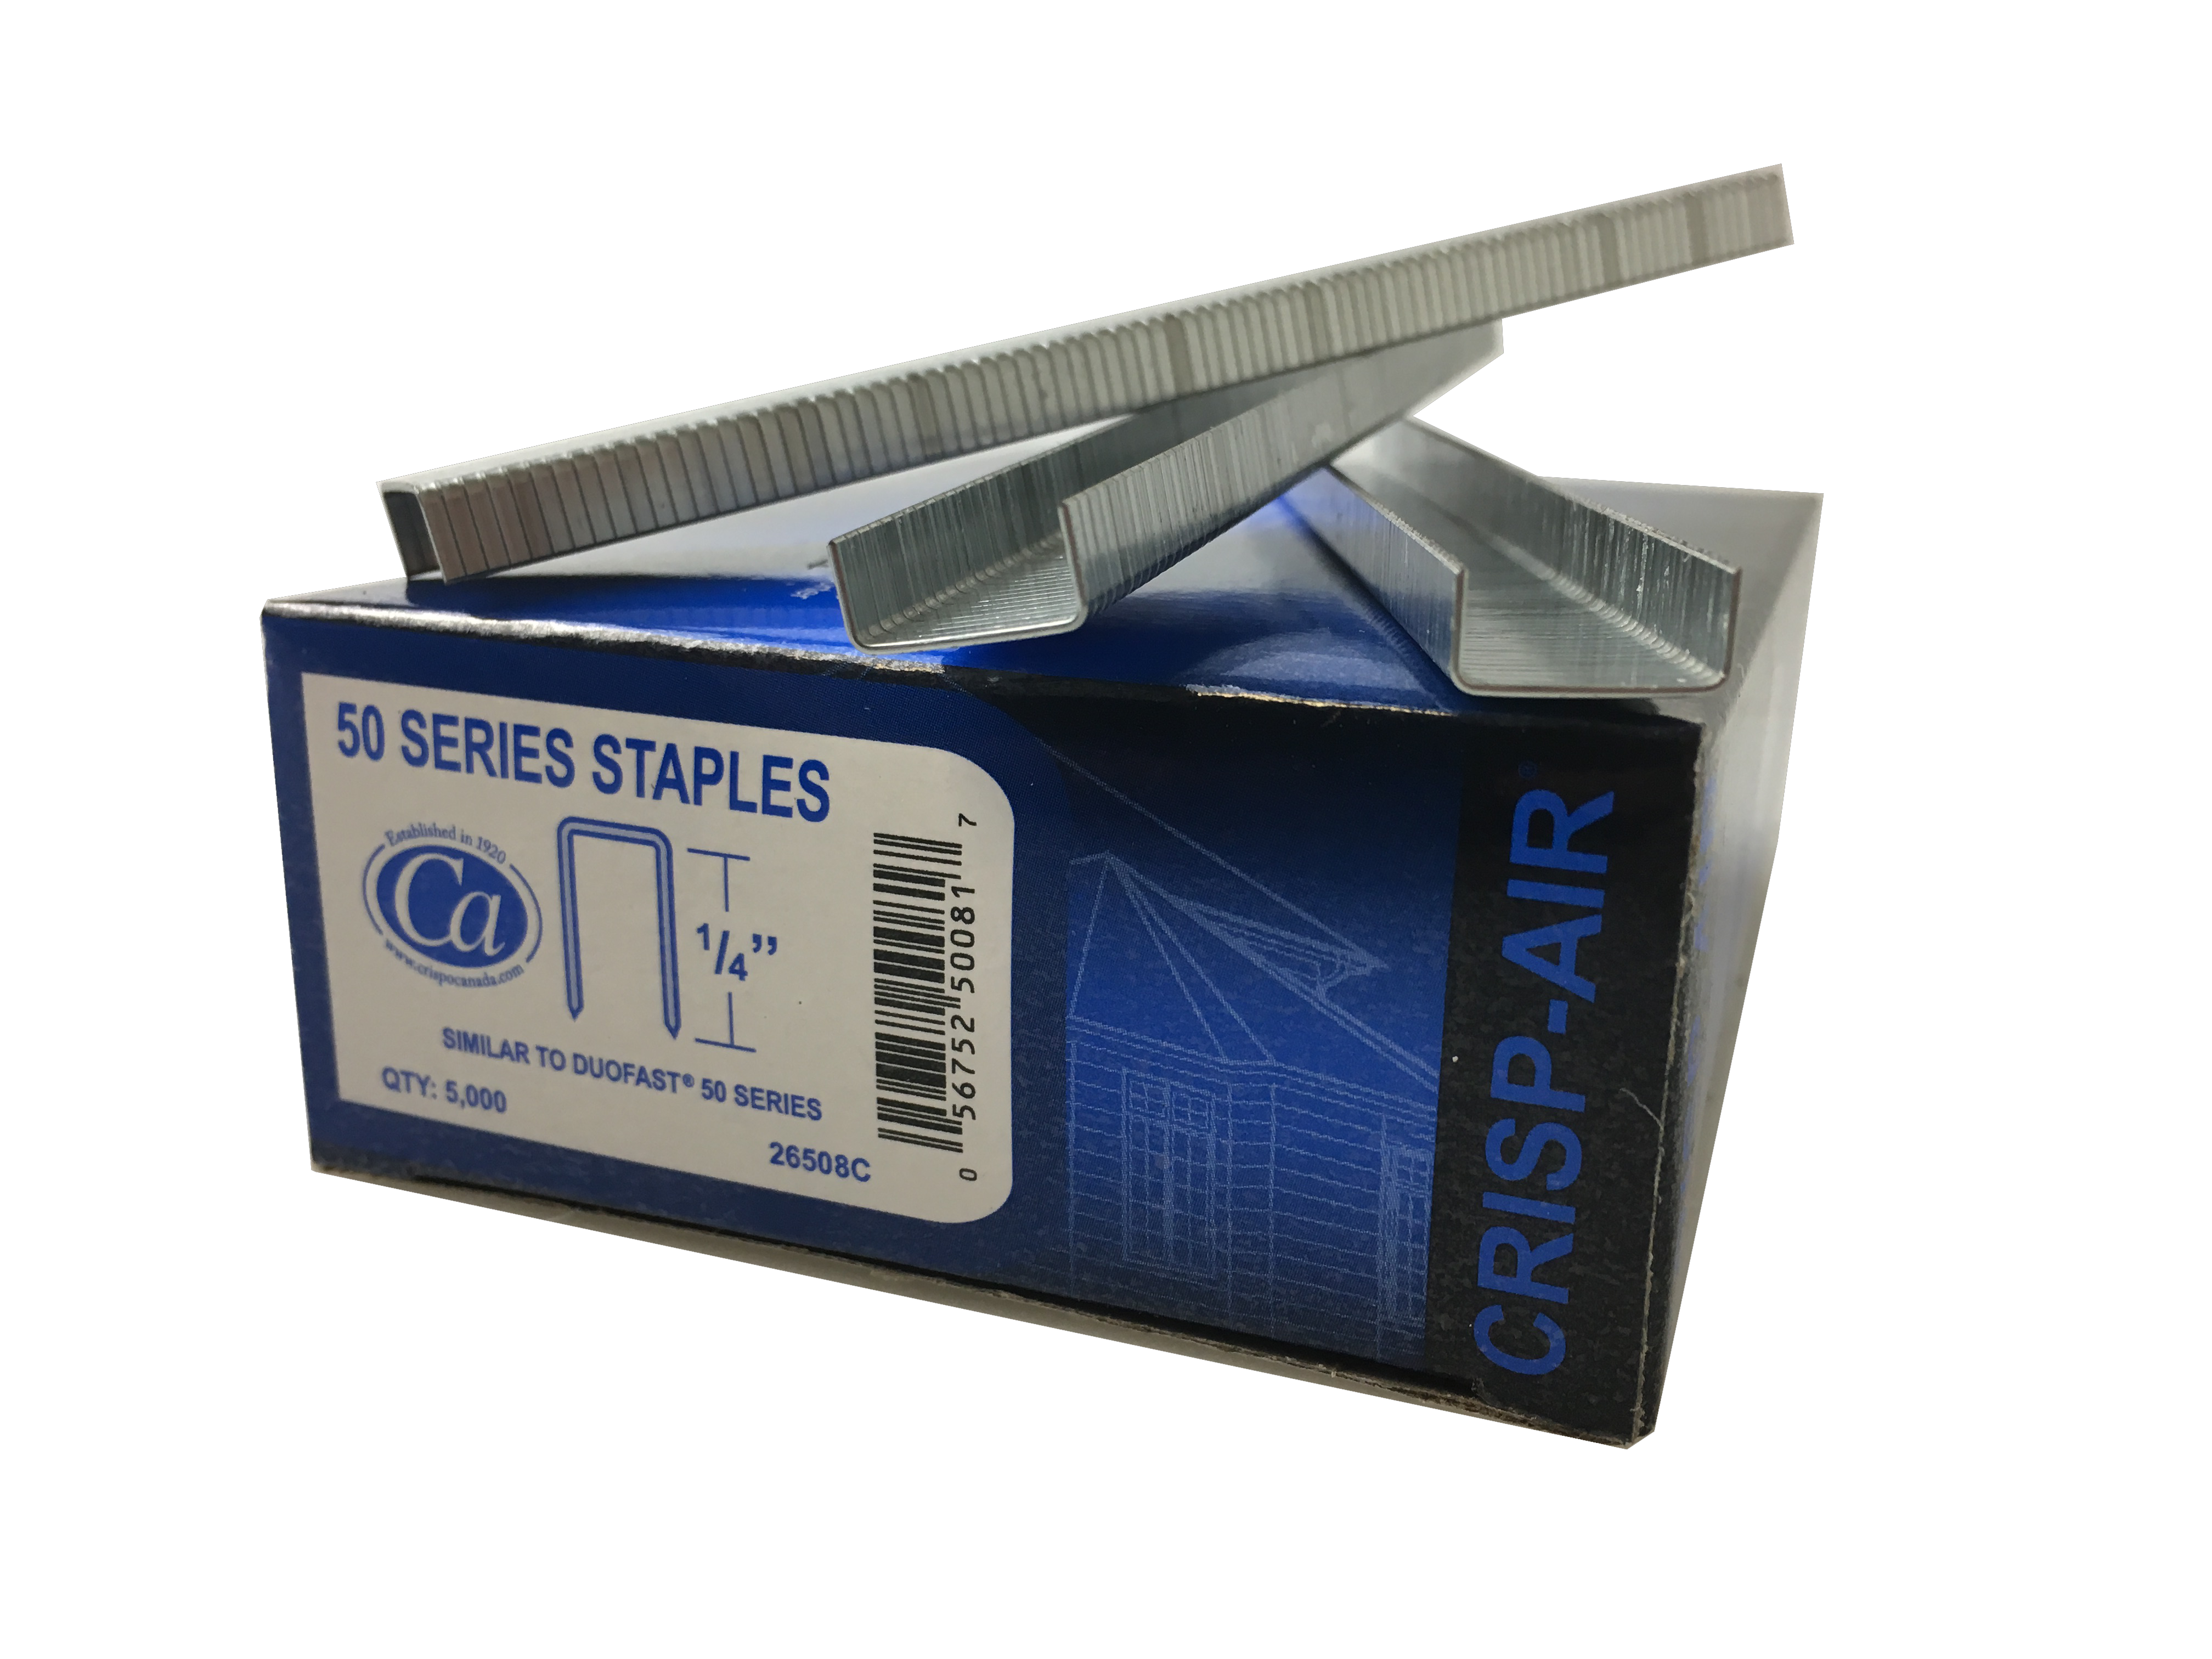 Grapas Crisp-Air 1/4" Duofast 508 - Caja de 20 Cajas (5M/Caja)